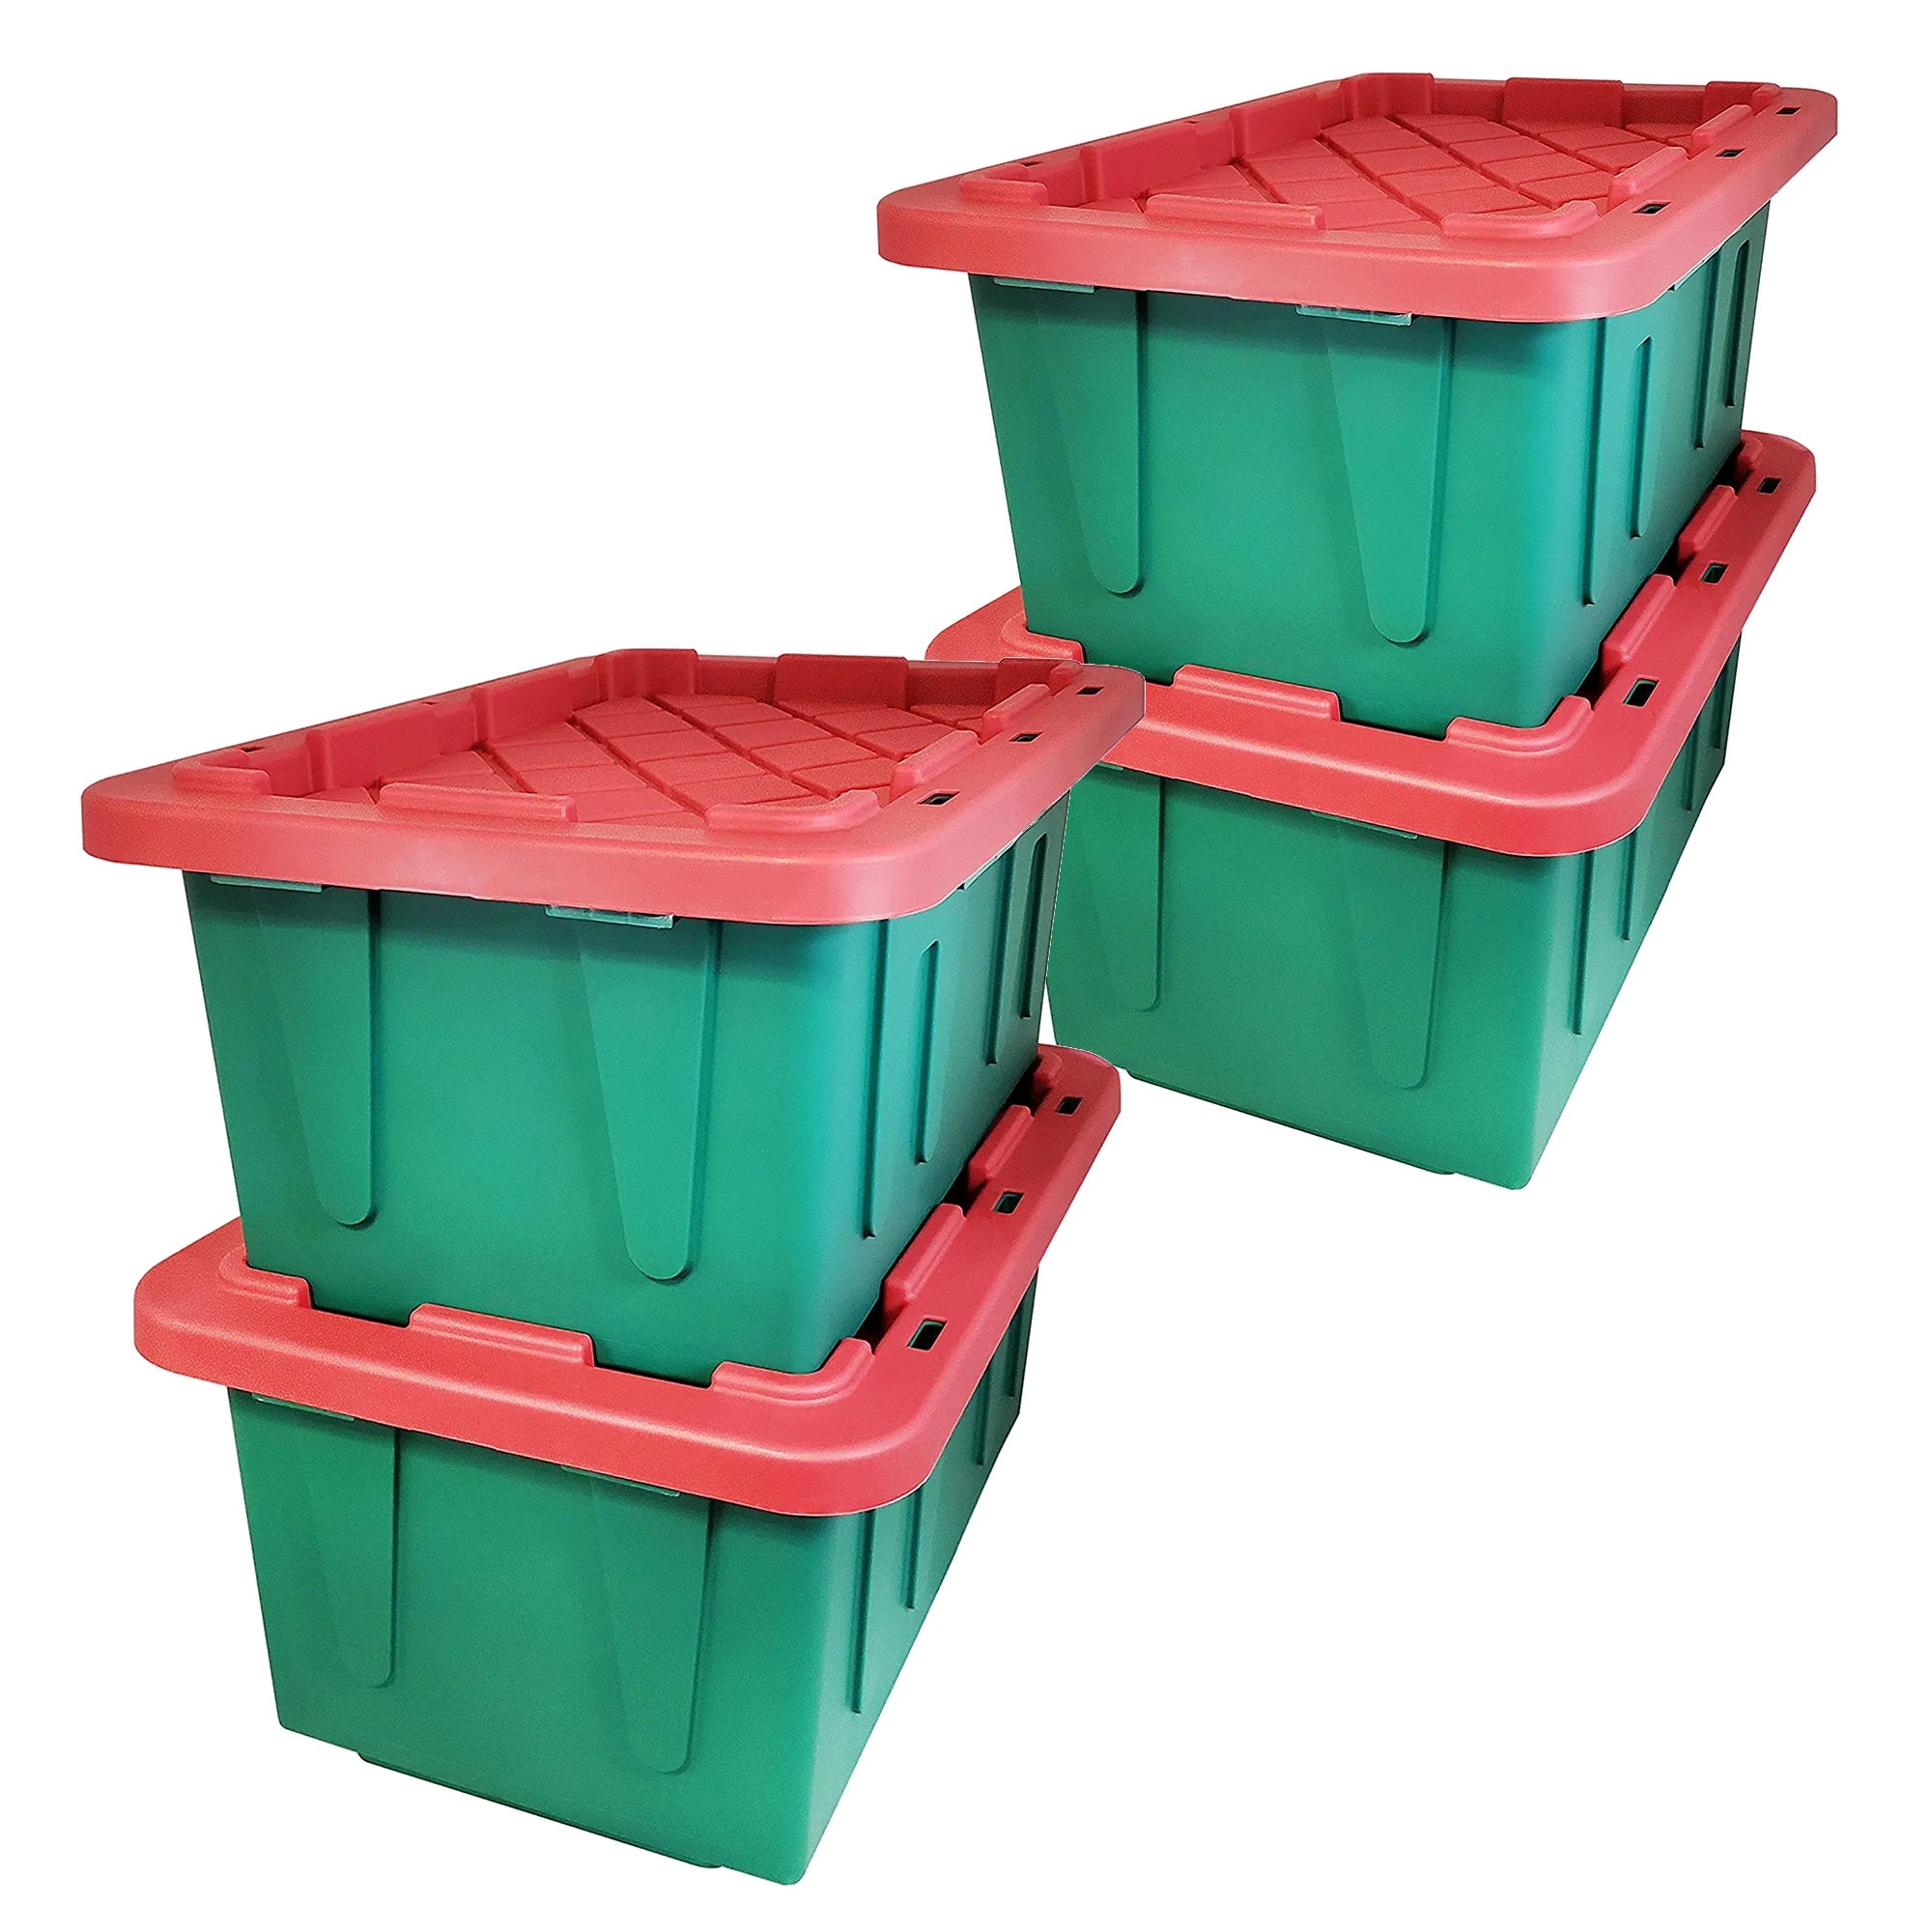 HOMZ Durabilt 15 Gallon Heavy Duty Holiday Storage Tote, Green/Red